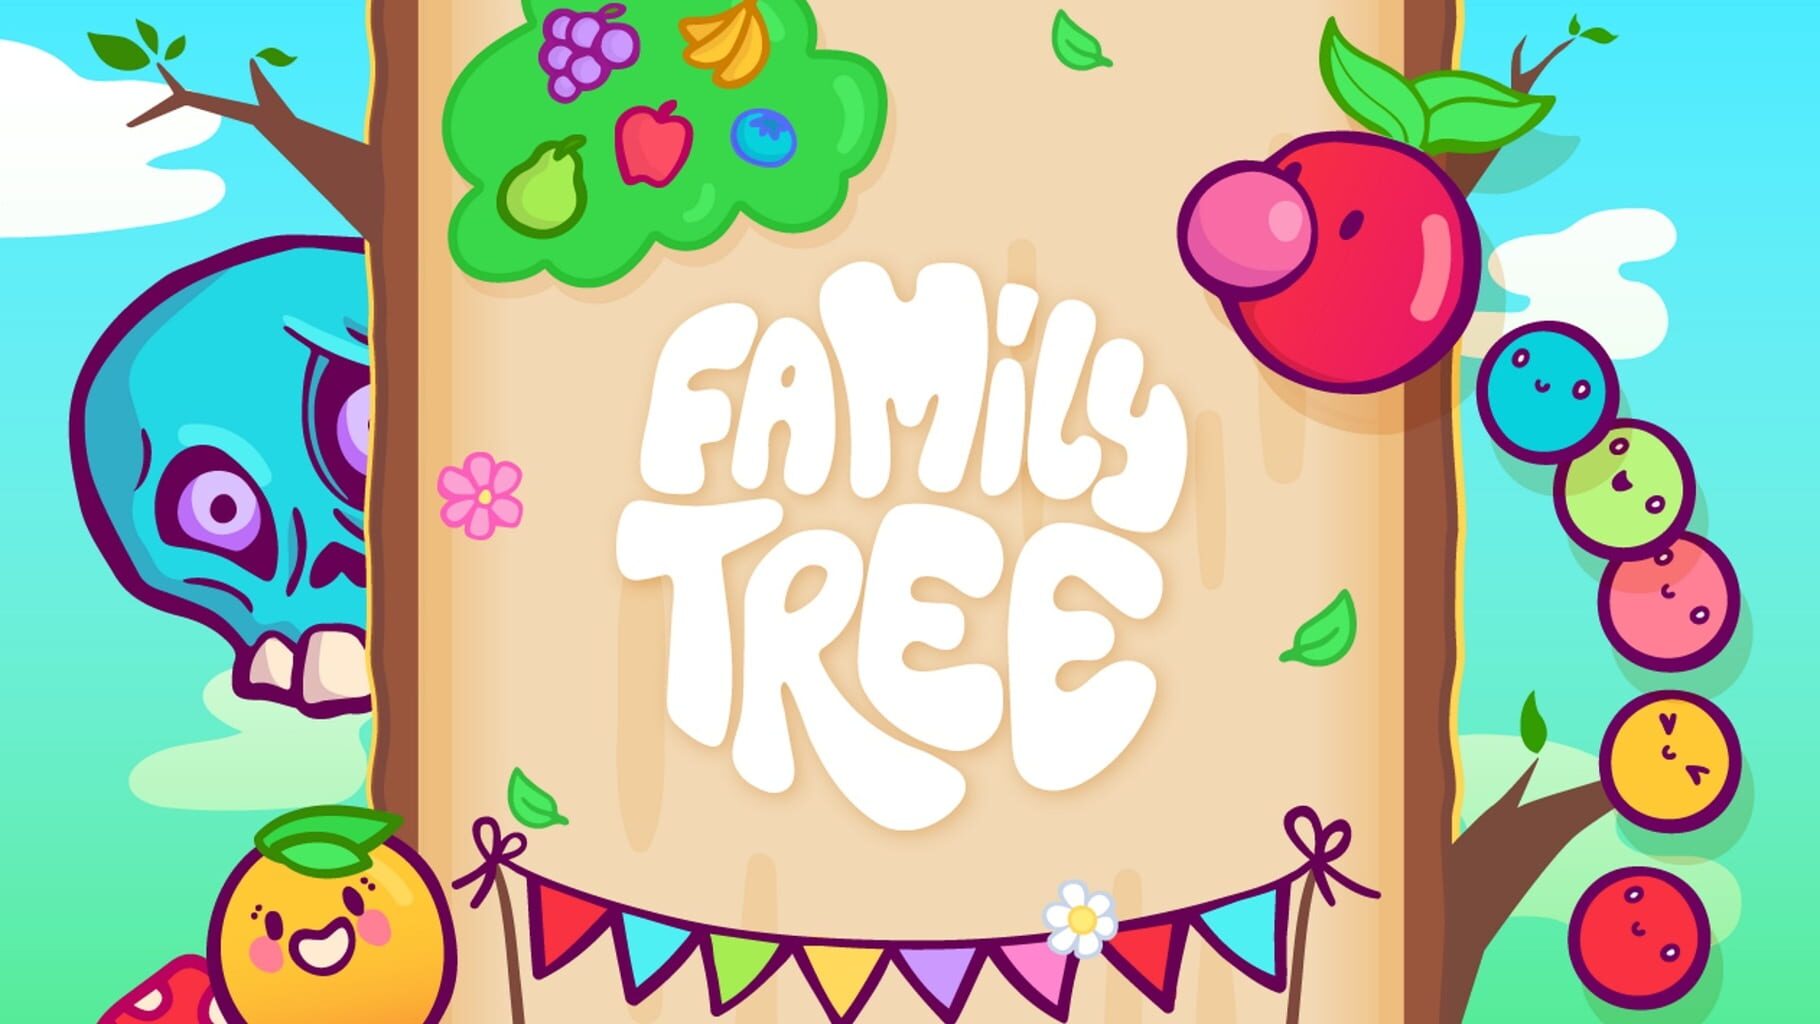 Family Tree artwork